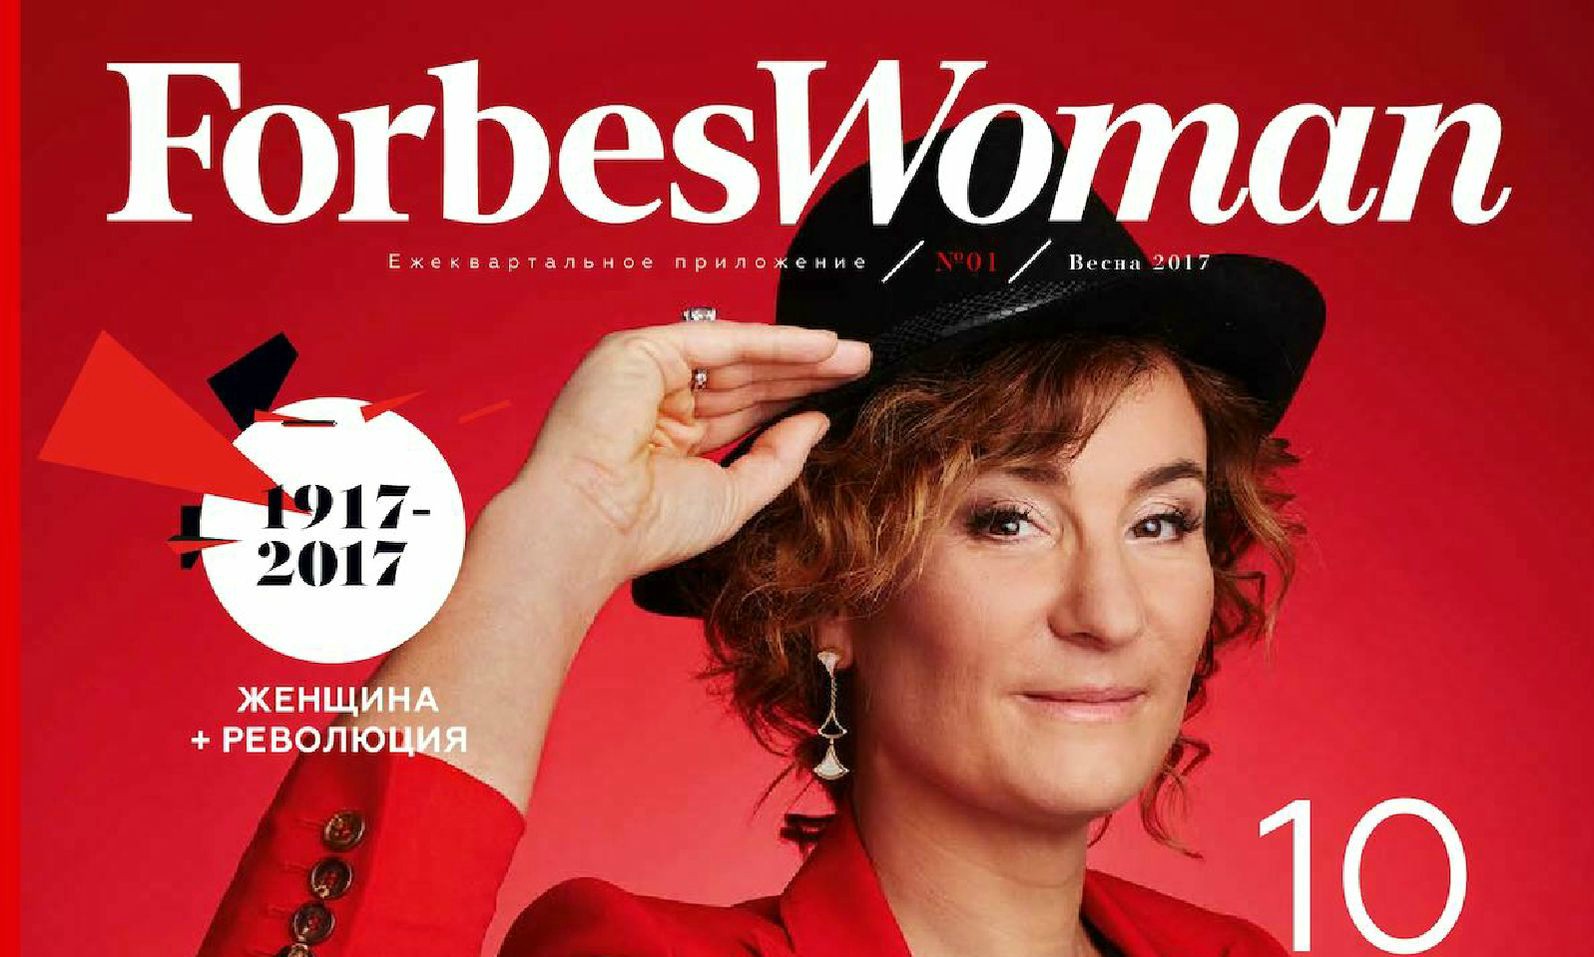 Печатная версия журнала Forbes Woman закрывается